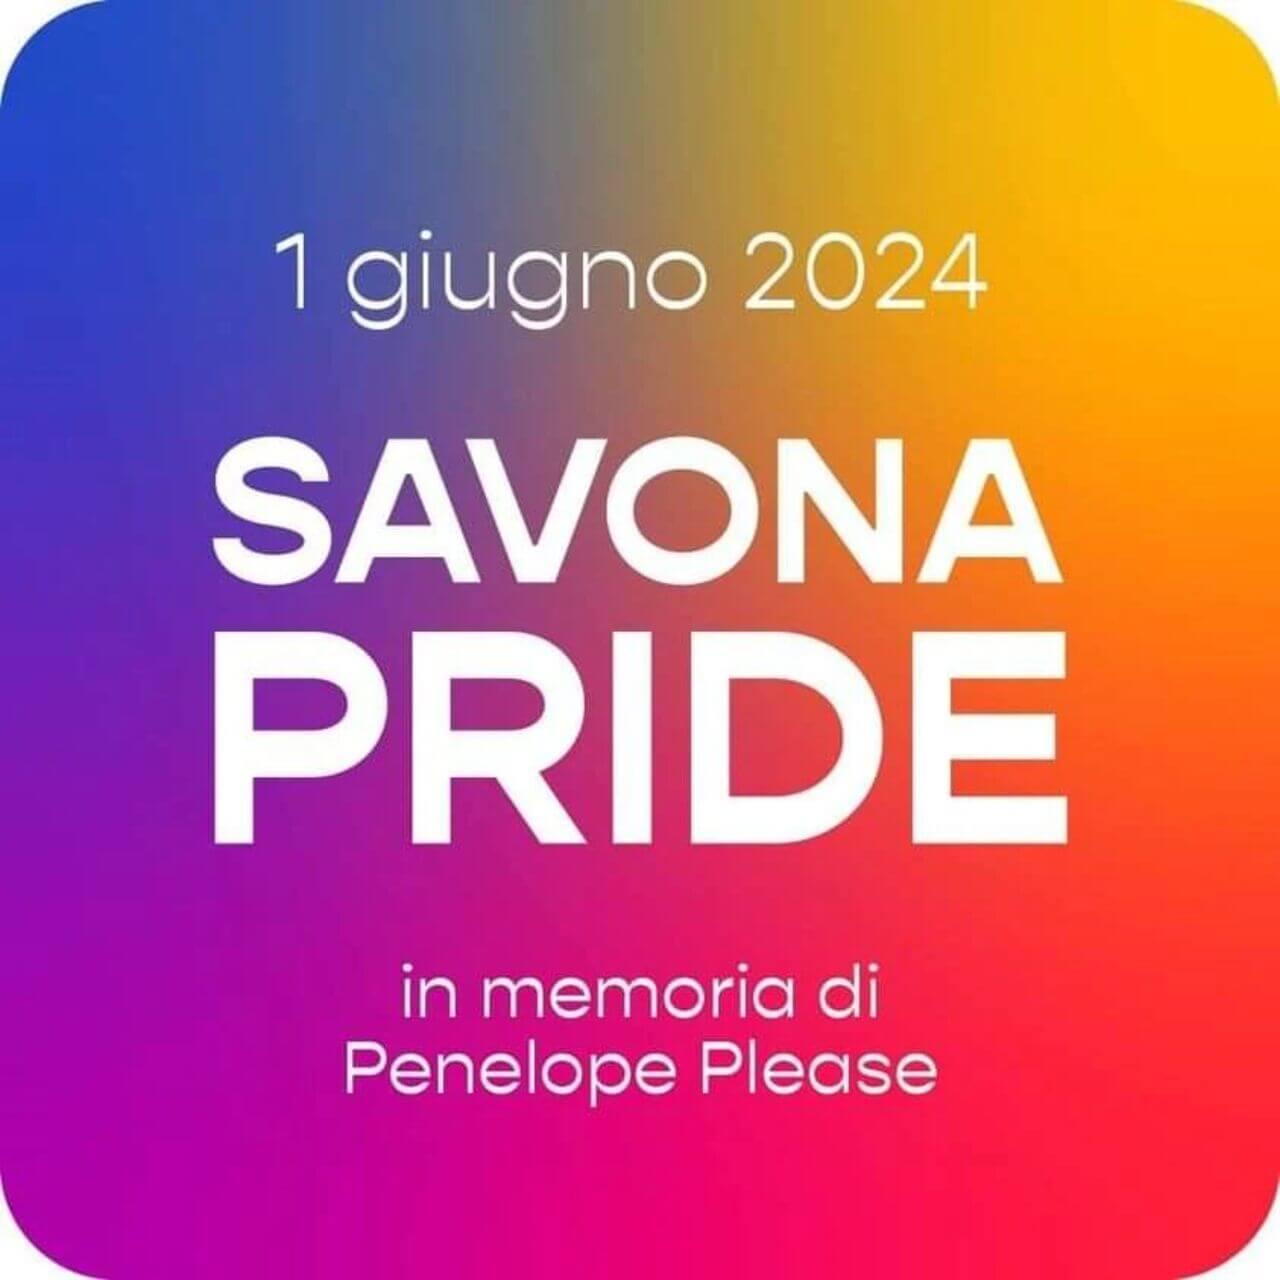 savona pride 2024, sabato 1 giugno